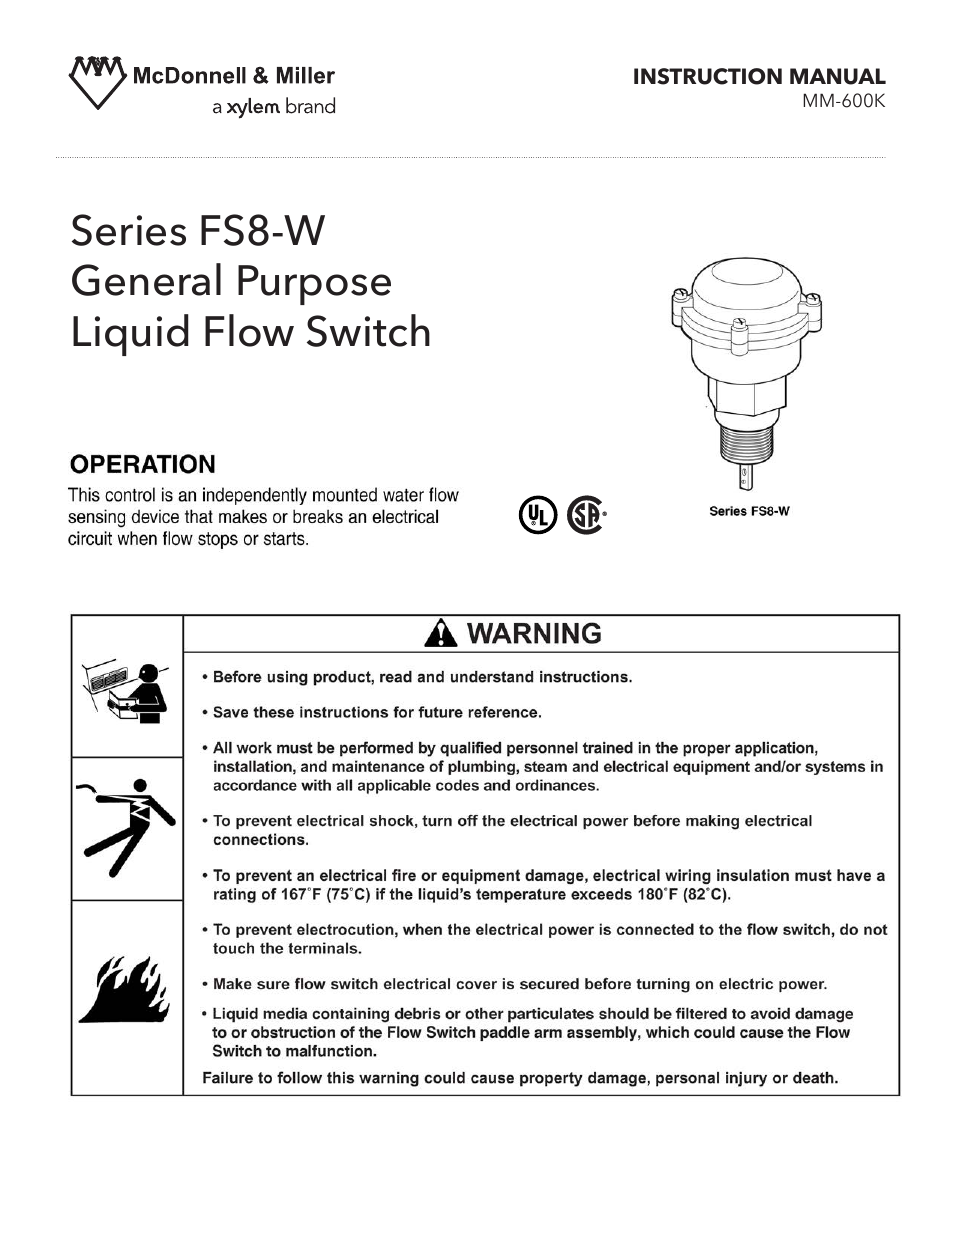 MM 600K Series FS8-W General Purpose Liquid Flow Switch